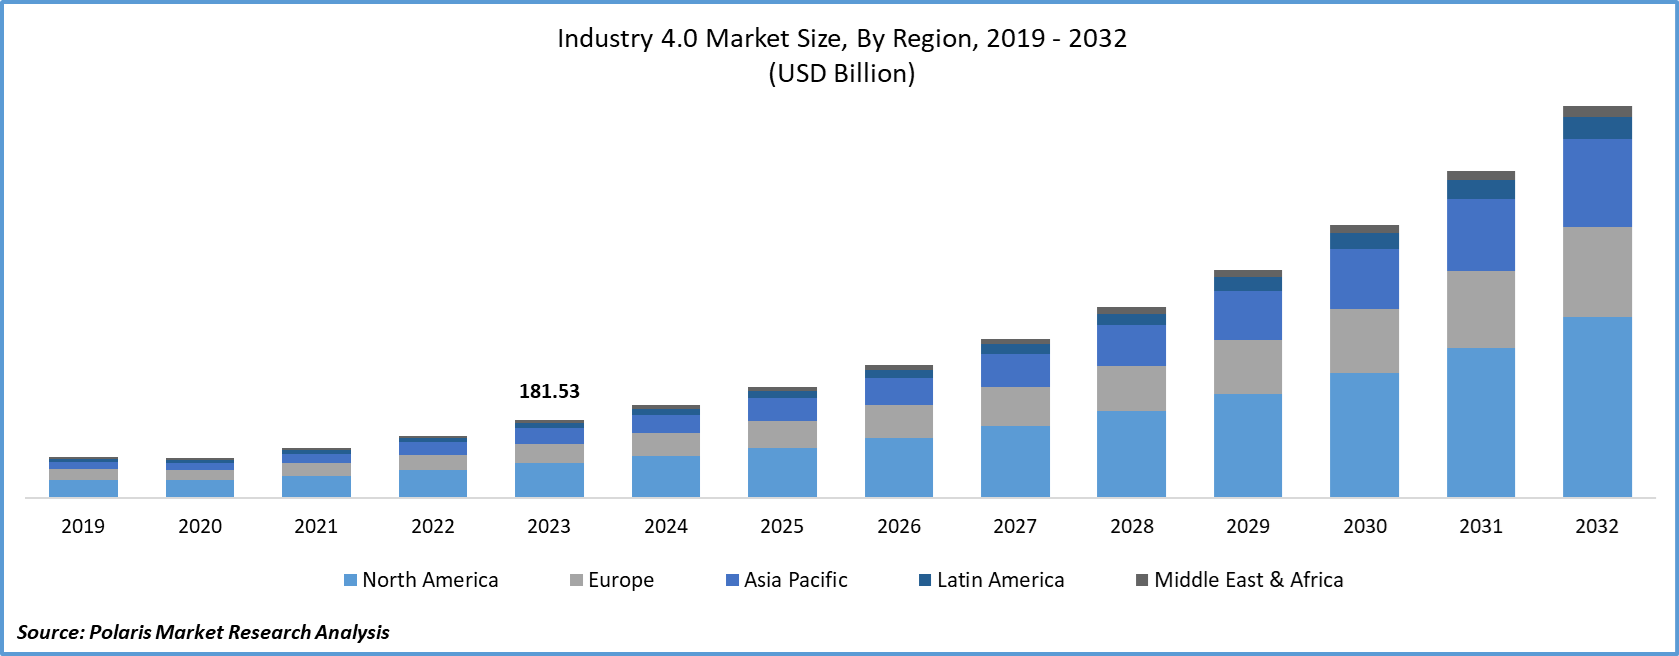 Industry 4.0 Market Size